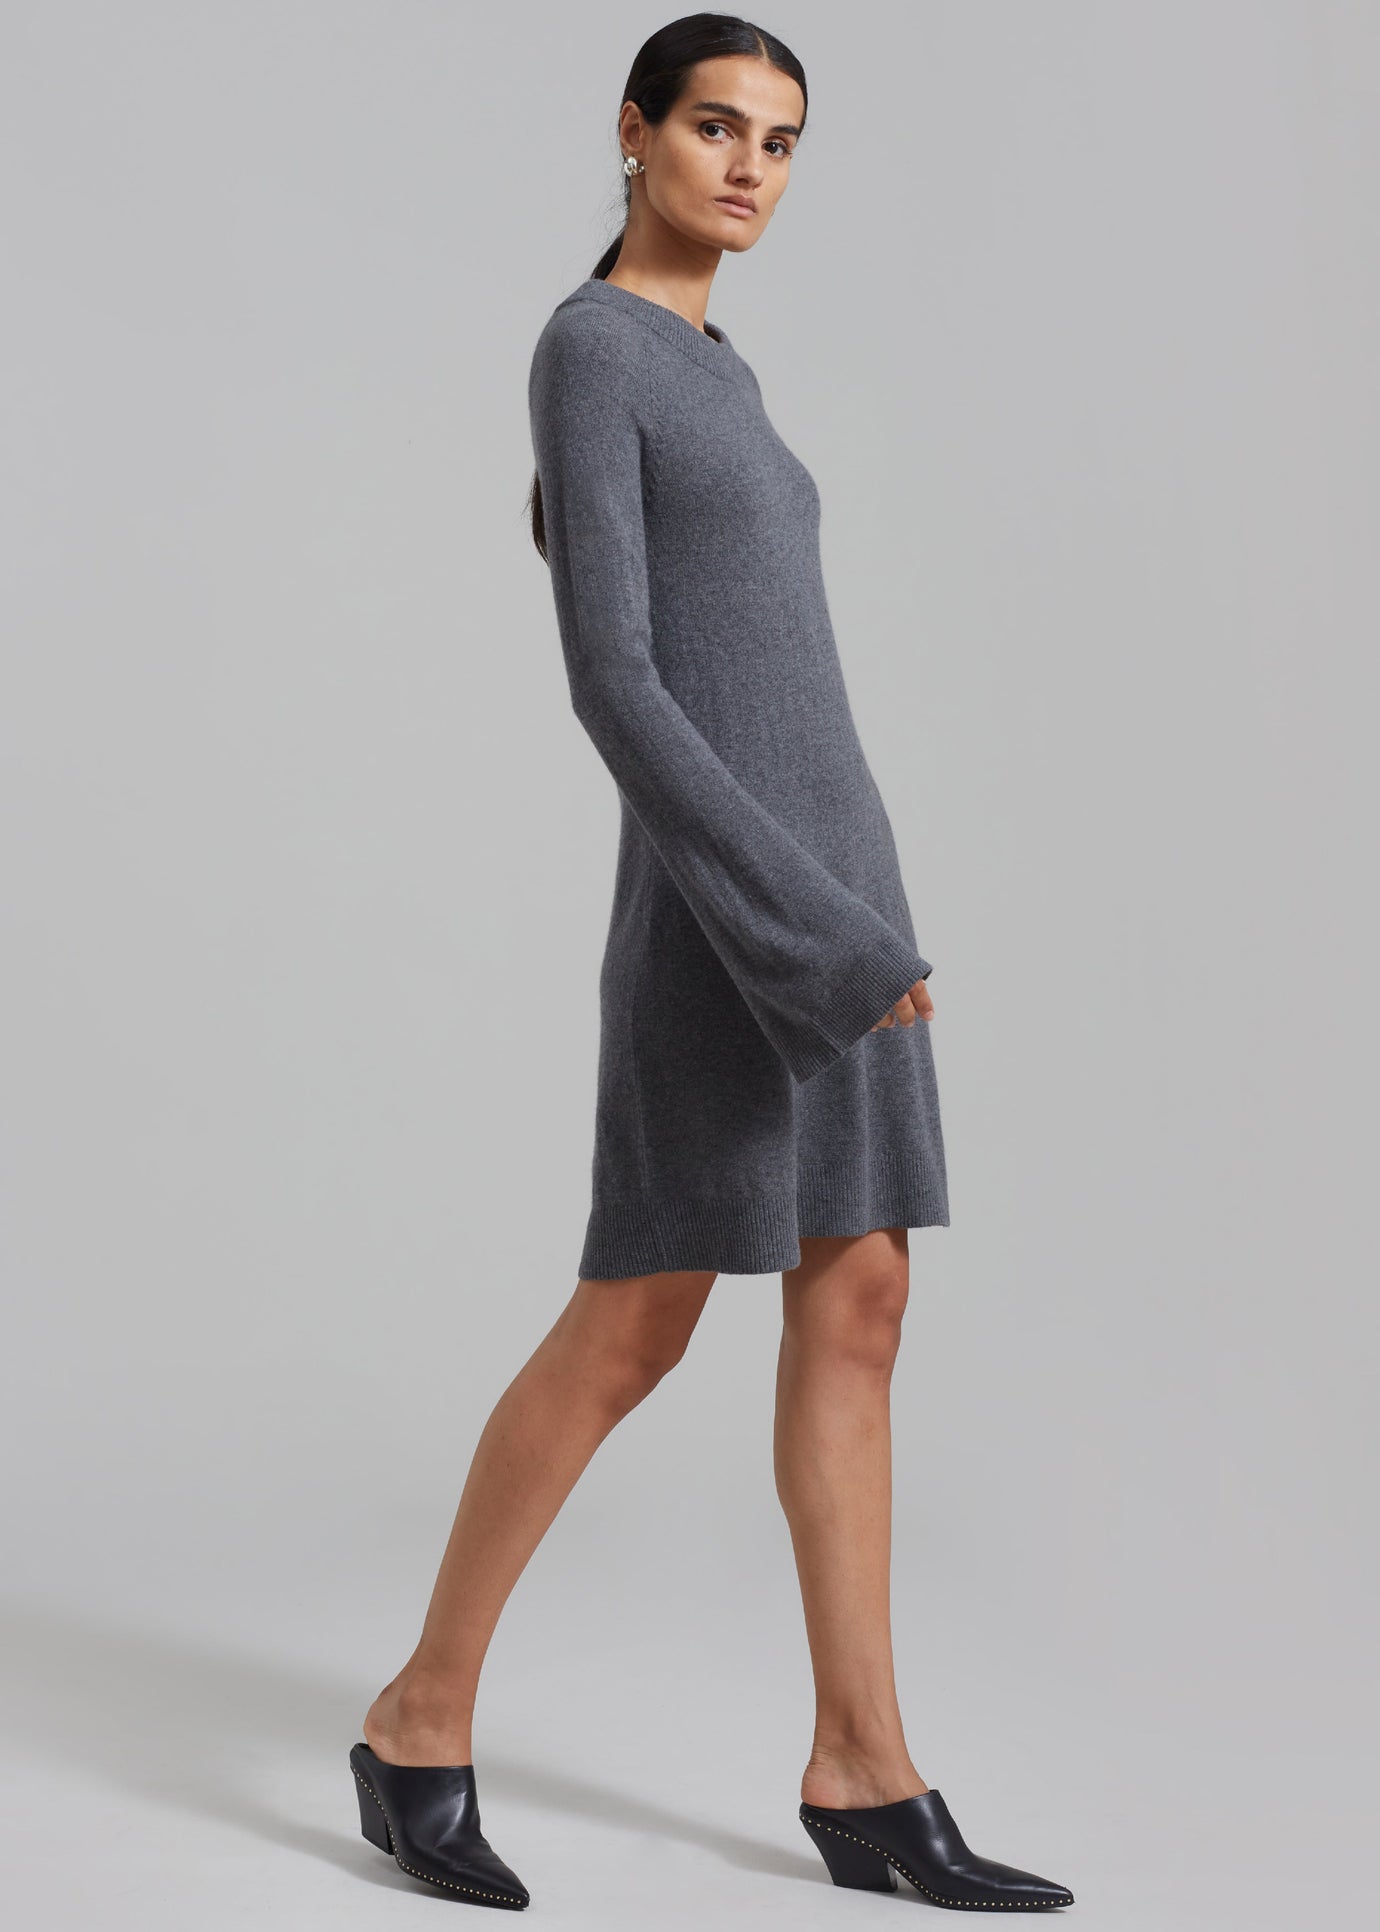 The Garment Como Raglan Dress - Grey Melange - 1